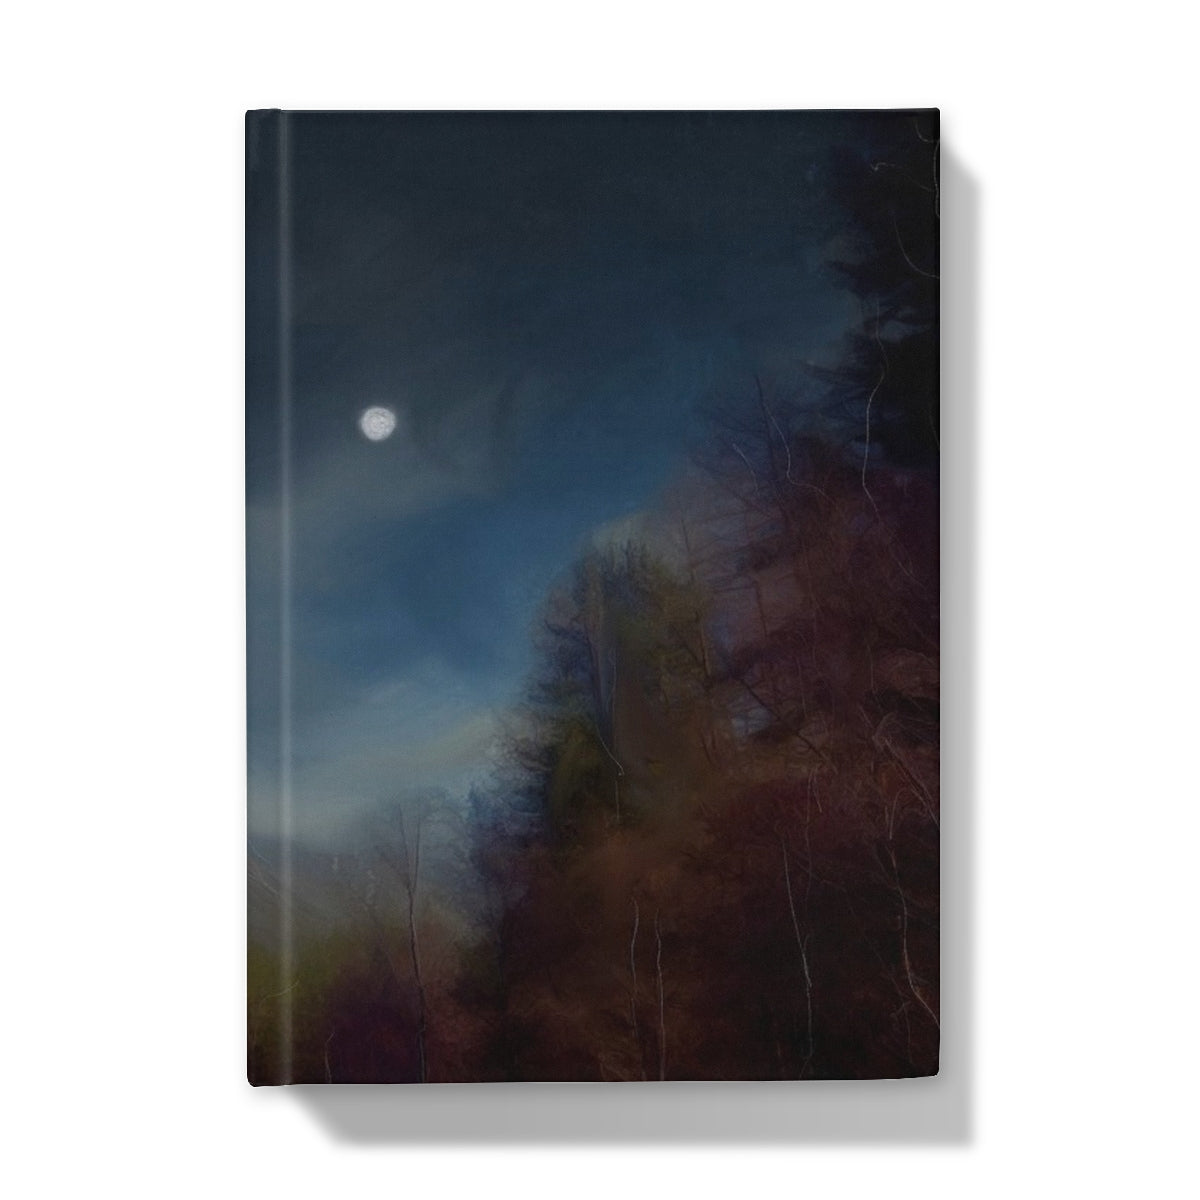 Glencoe Lochan Moonlight Art Gifts Hardback Journal-Journals & Notebooks-Scottish Lochs & Mountains Art Gallery-5"x7"-Plain-Paintings, Prints, Homeware, Art Gifts From Scotland By Scottish Artist Kevin Hunter